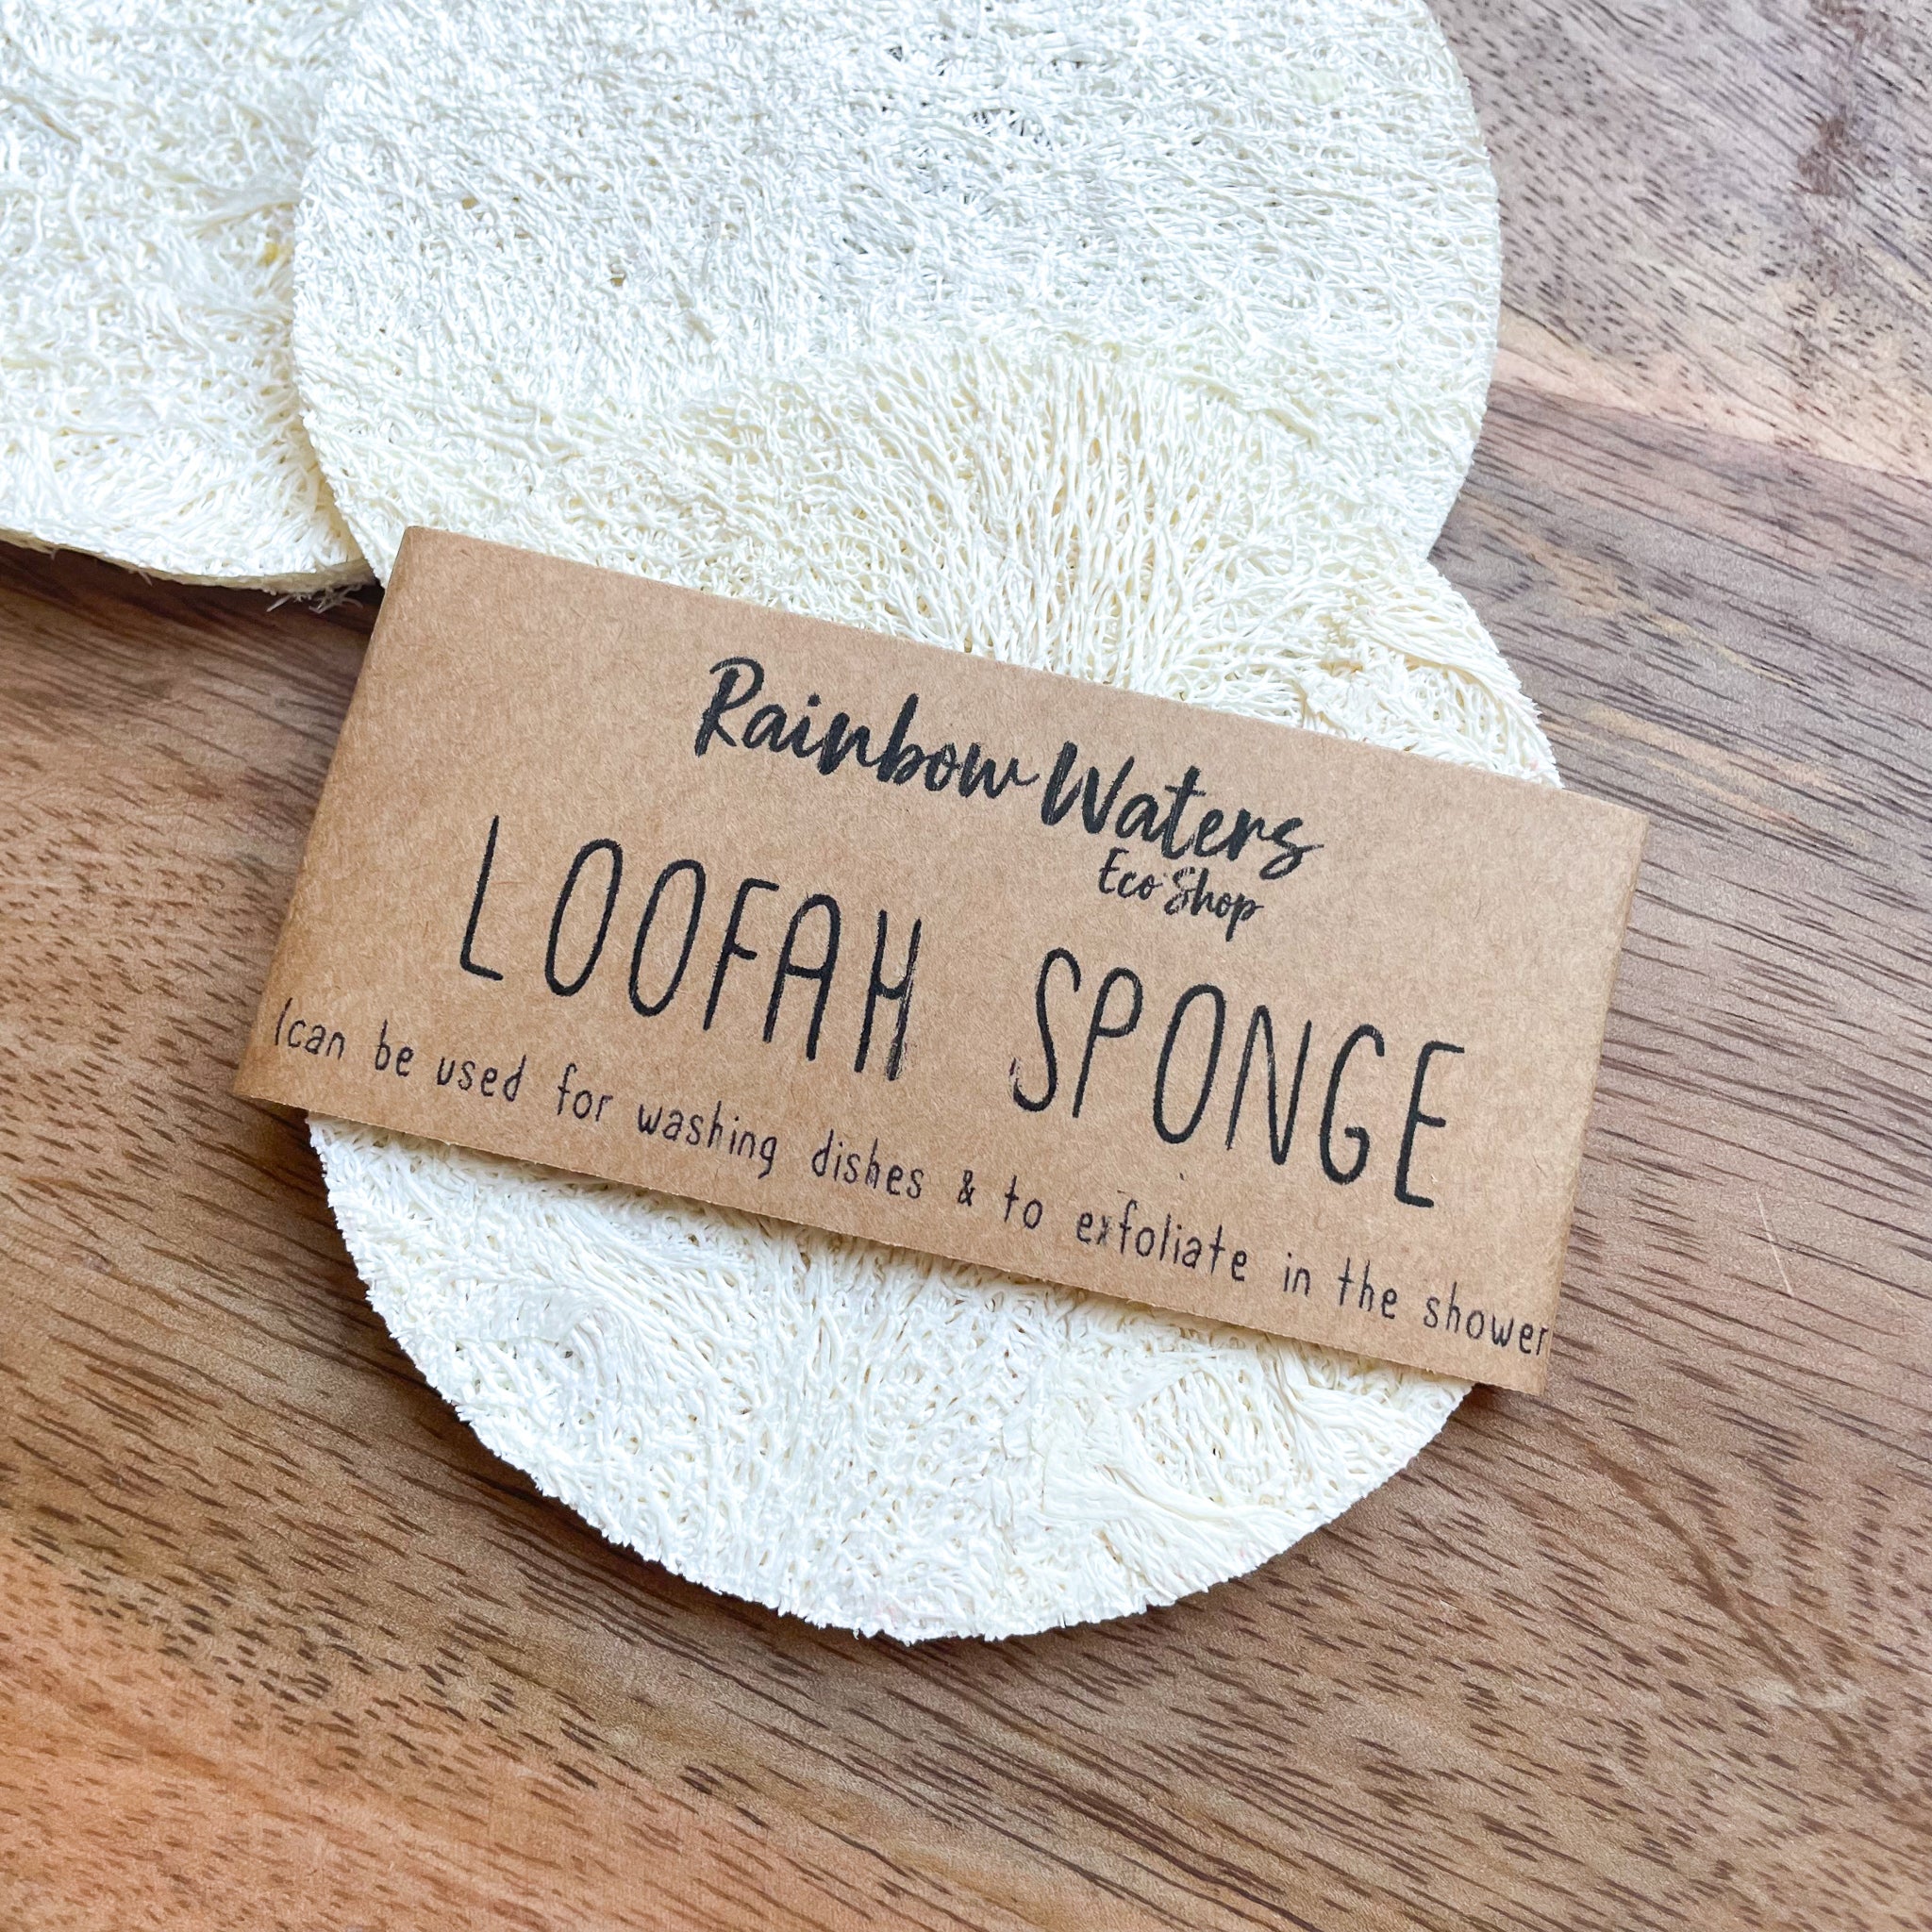 Loofah Sponge